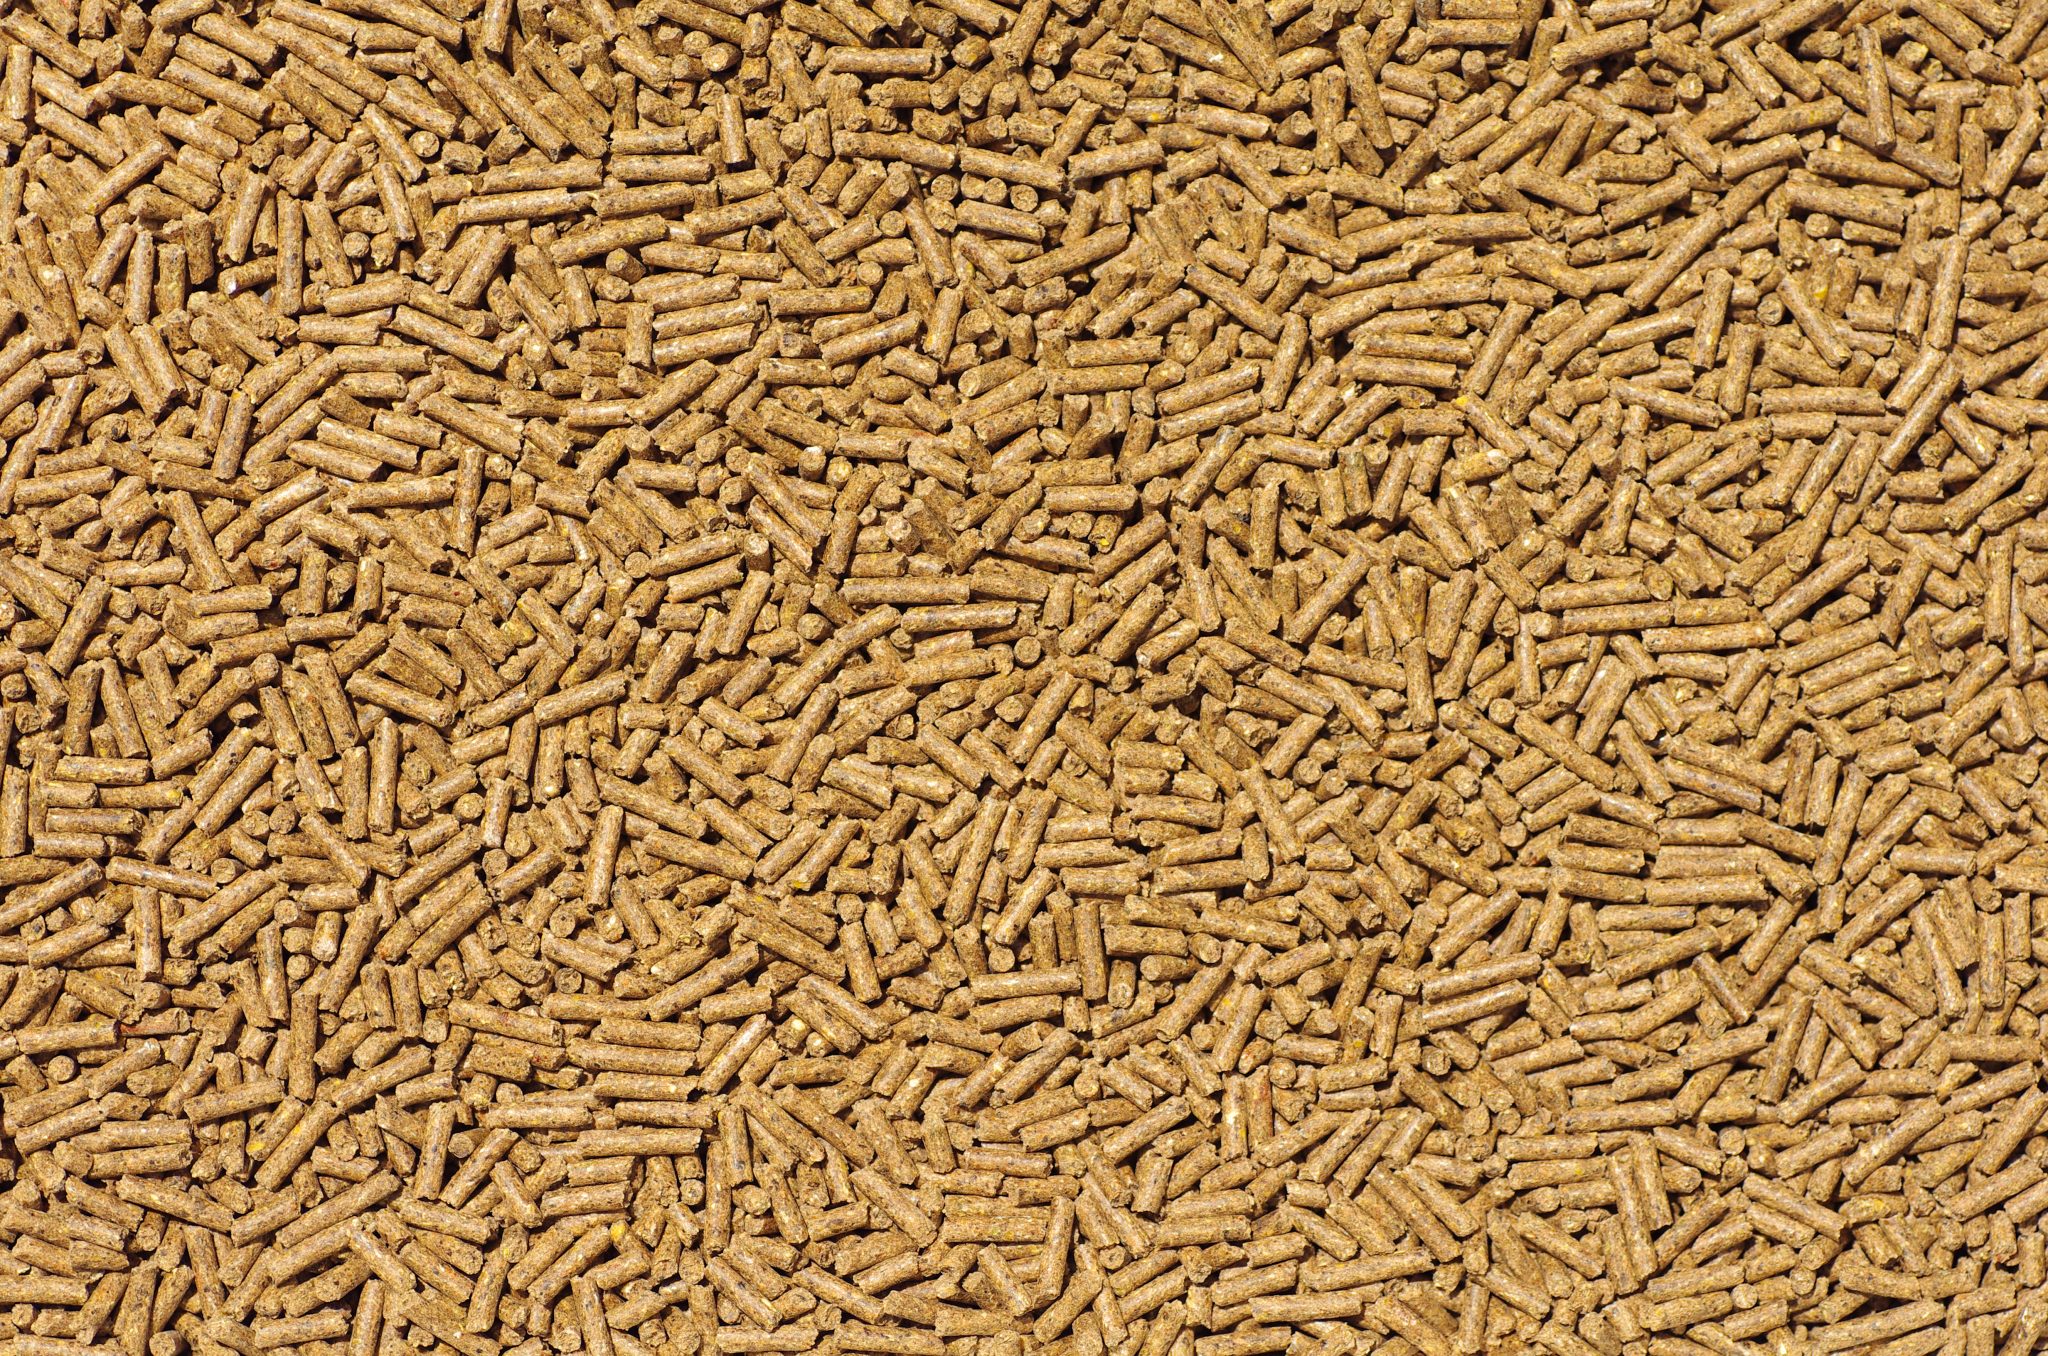 Close-up on livestock feed pellets